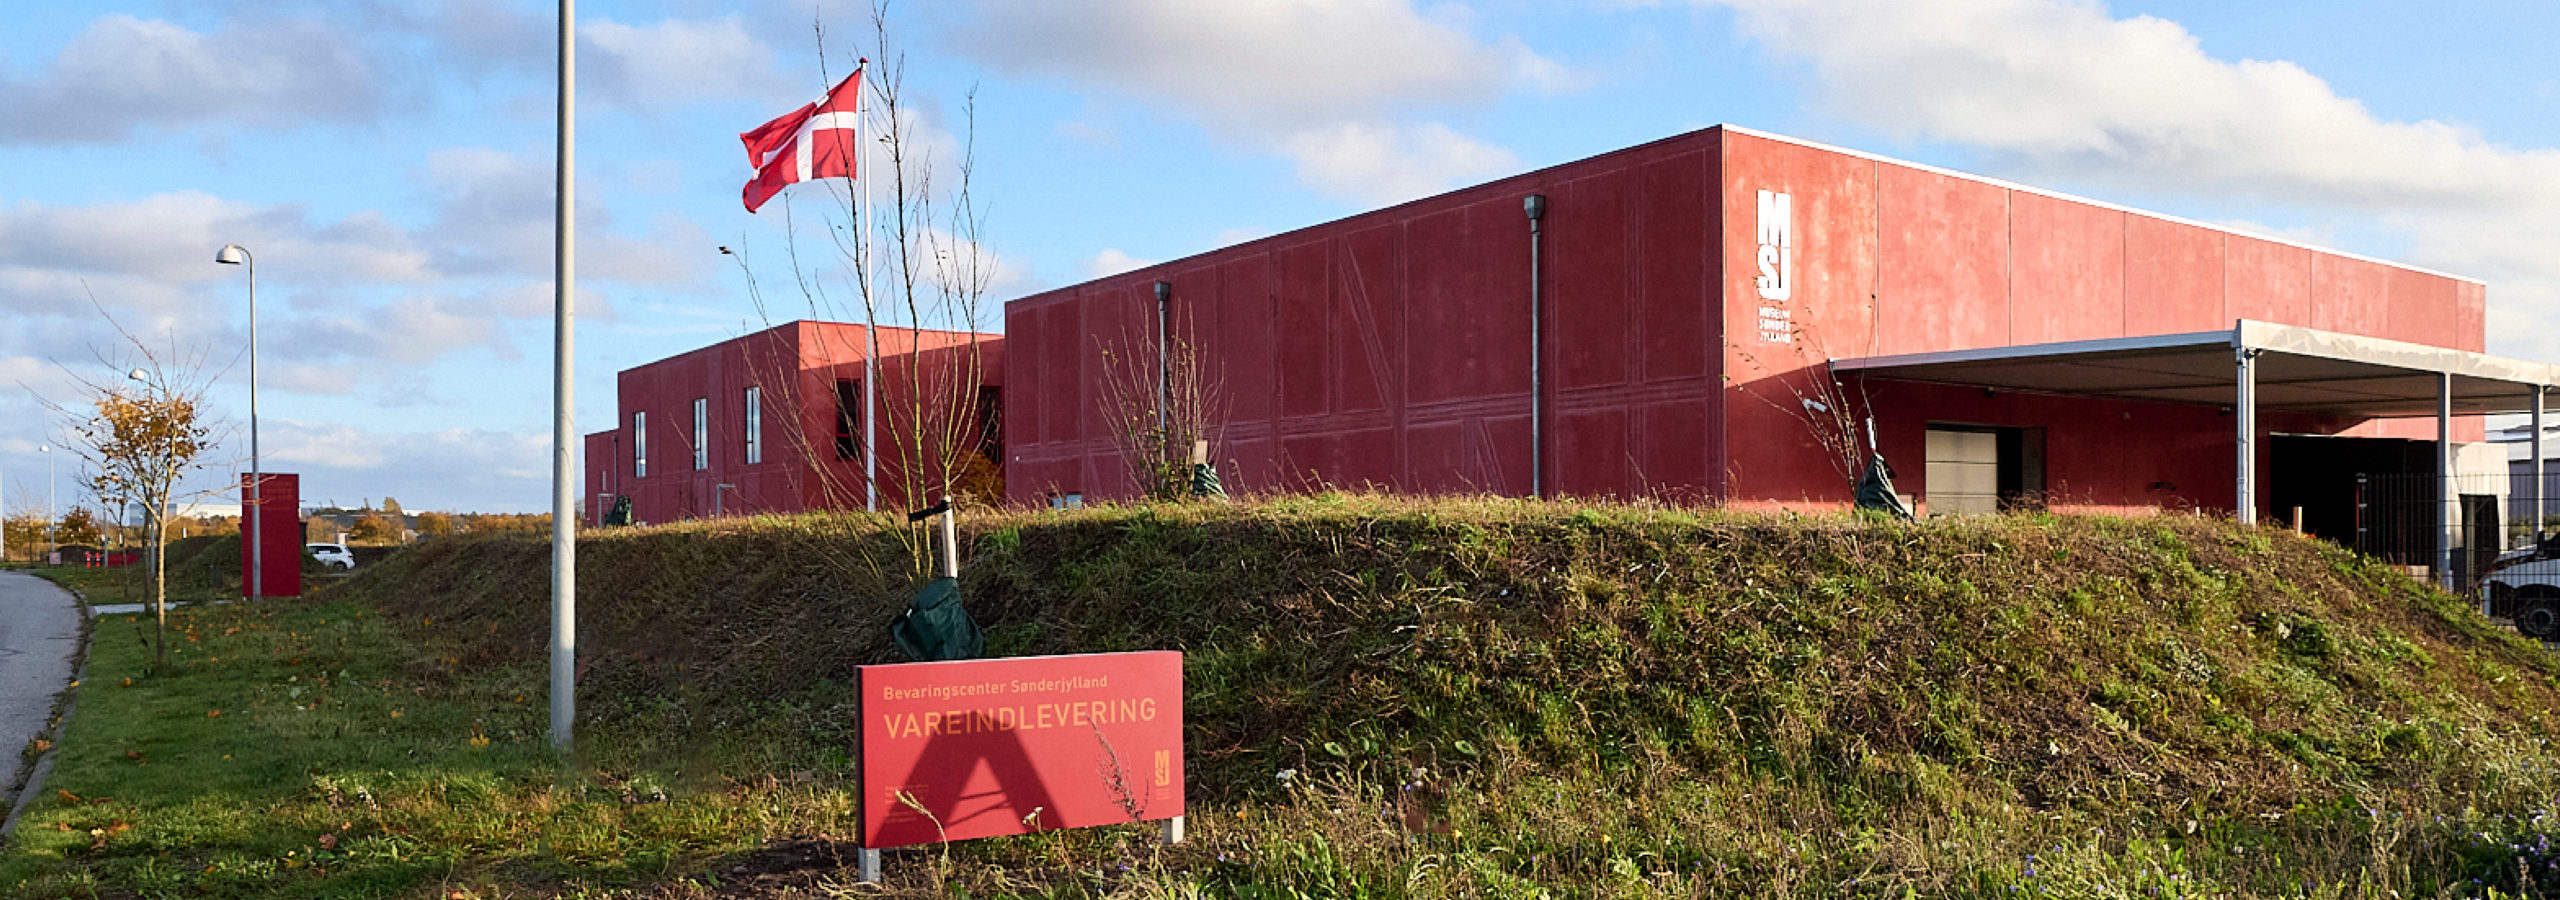 OMVISNING: Bevaringscenter Sønderjylland – 1 plads ledig